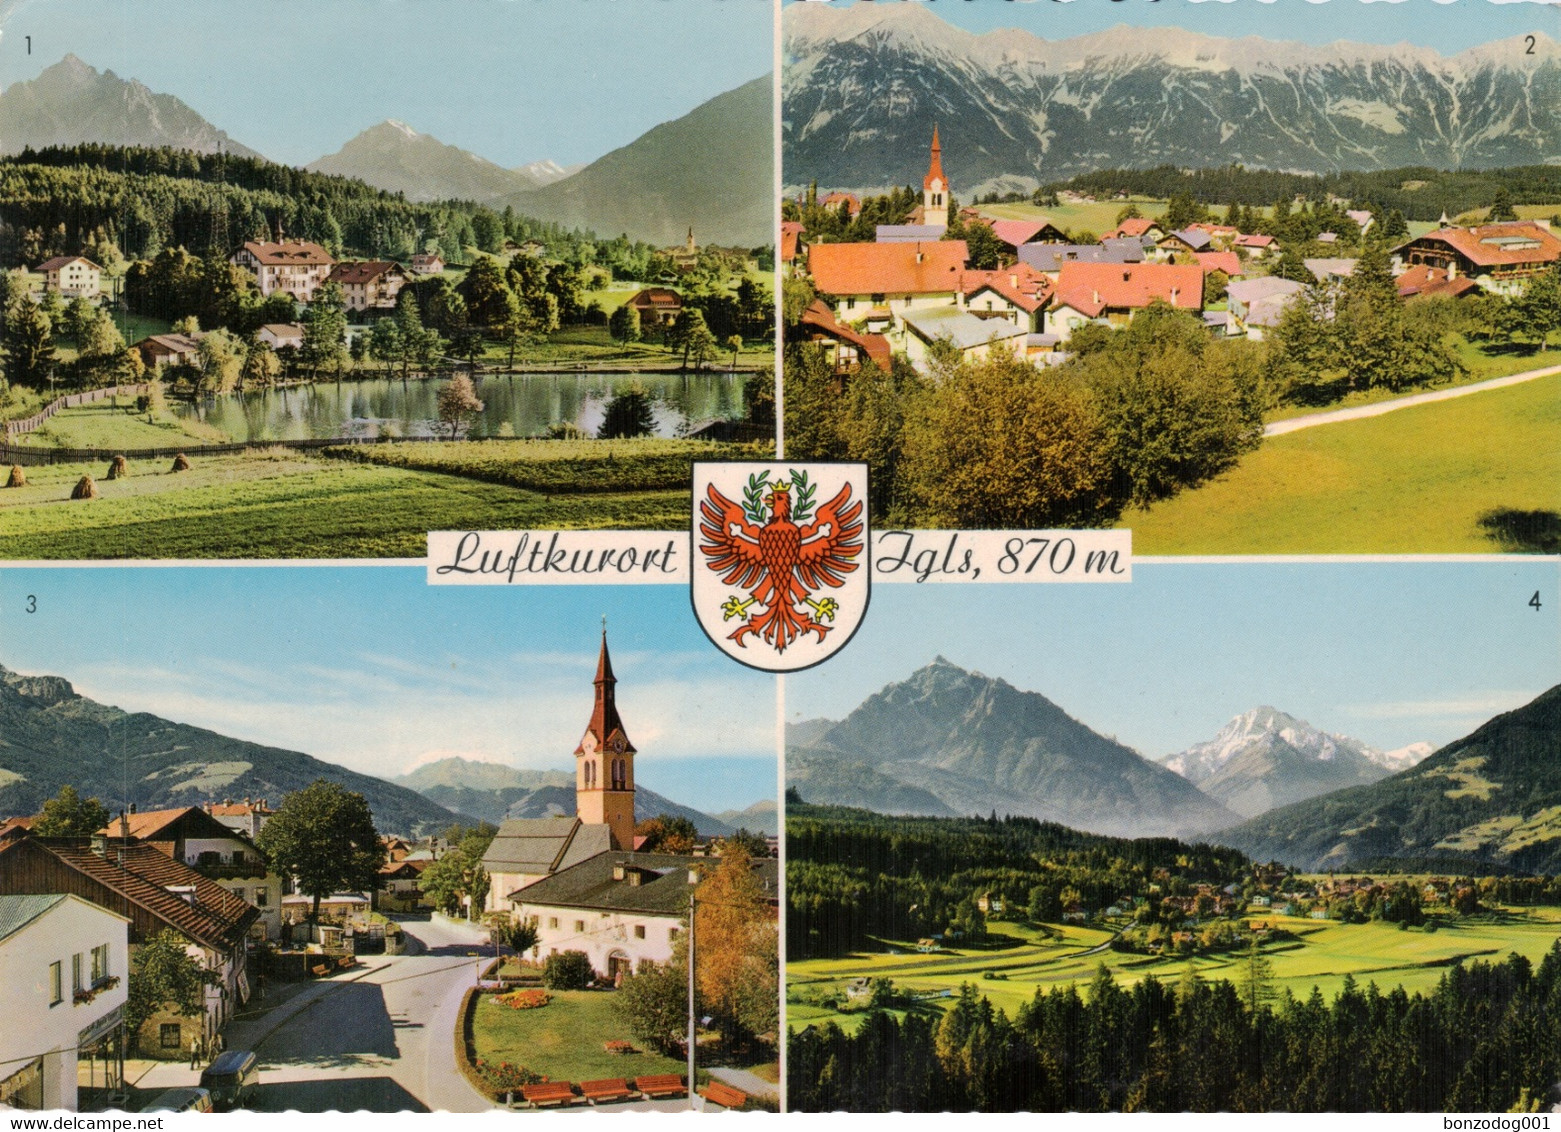 Luftkurort (Health Resort) Igls, Tirol, Austria. Multiview - Igls